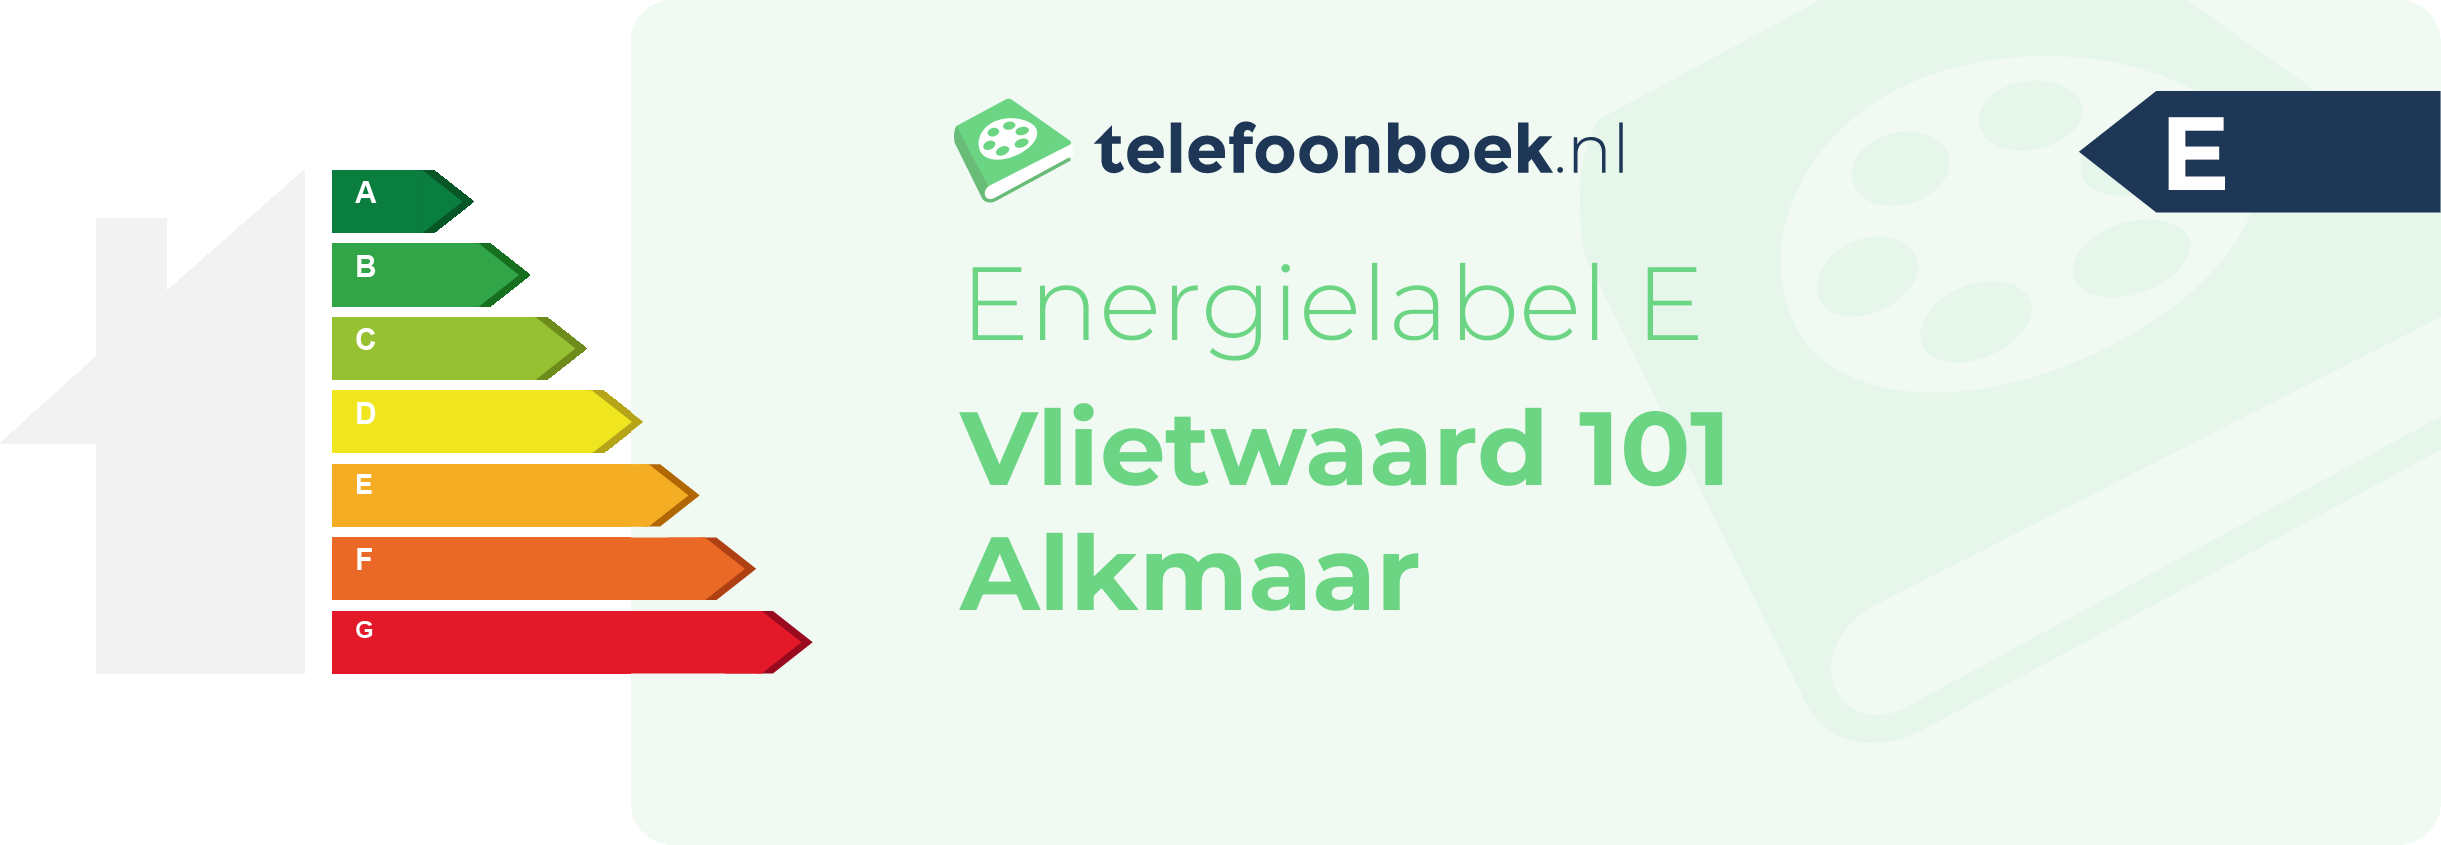 Energielabel Vlietwaard 101 Alkmaar